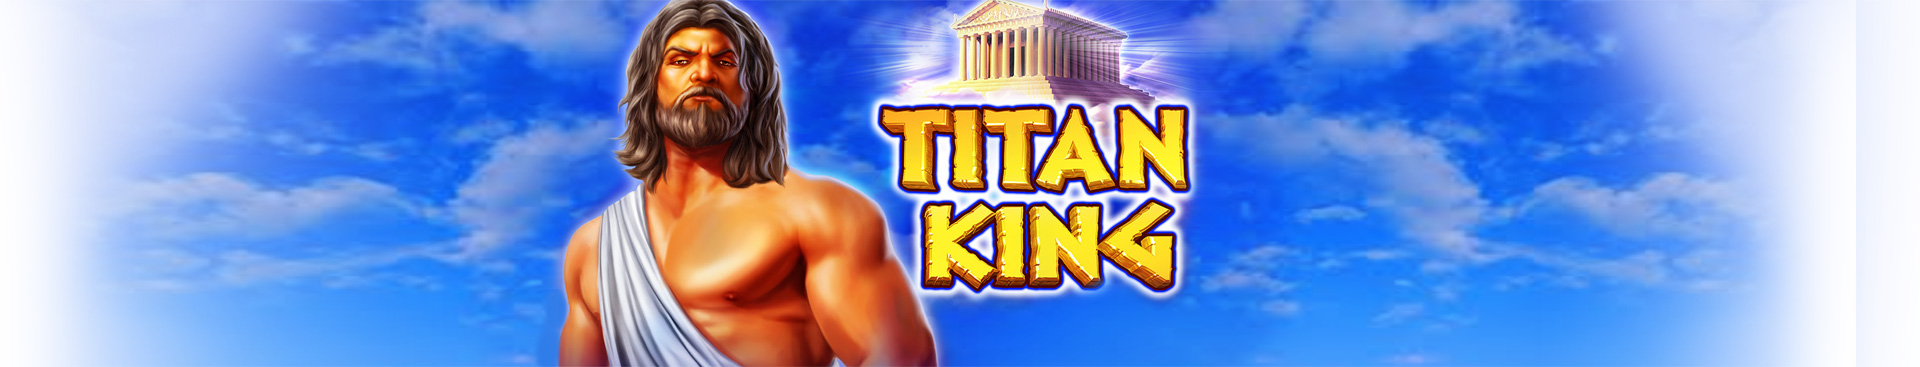 Titan King